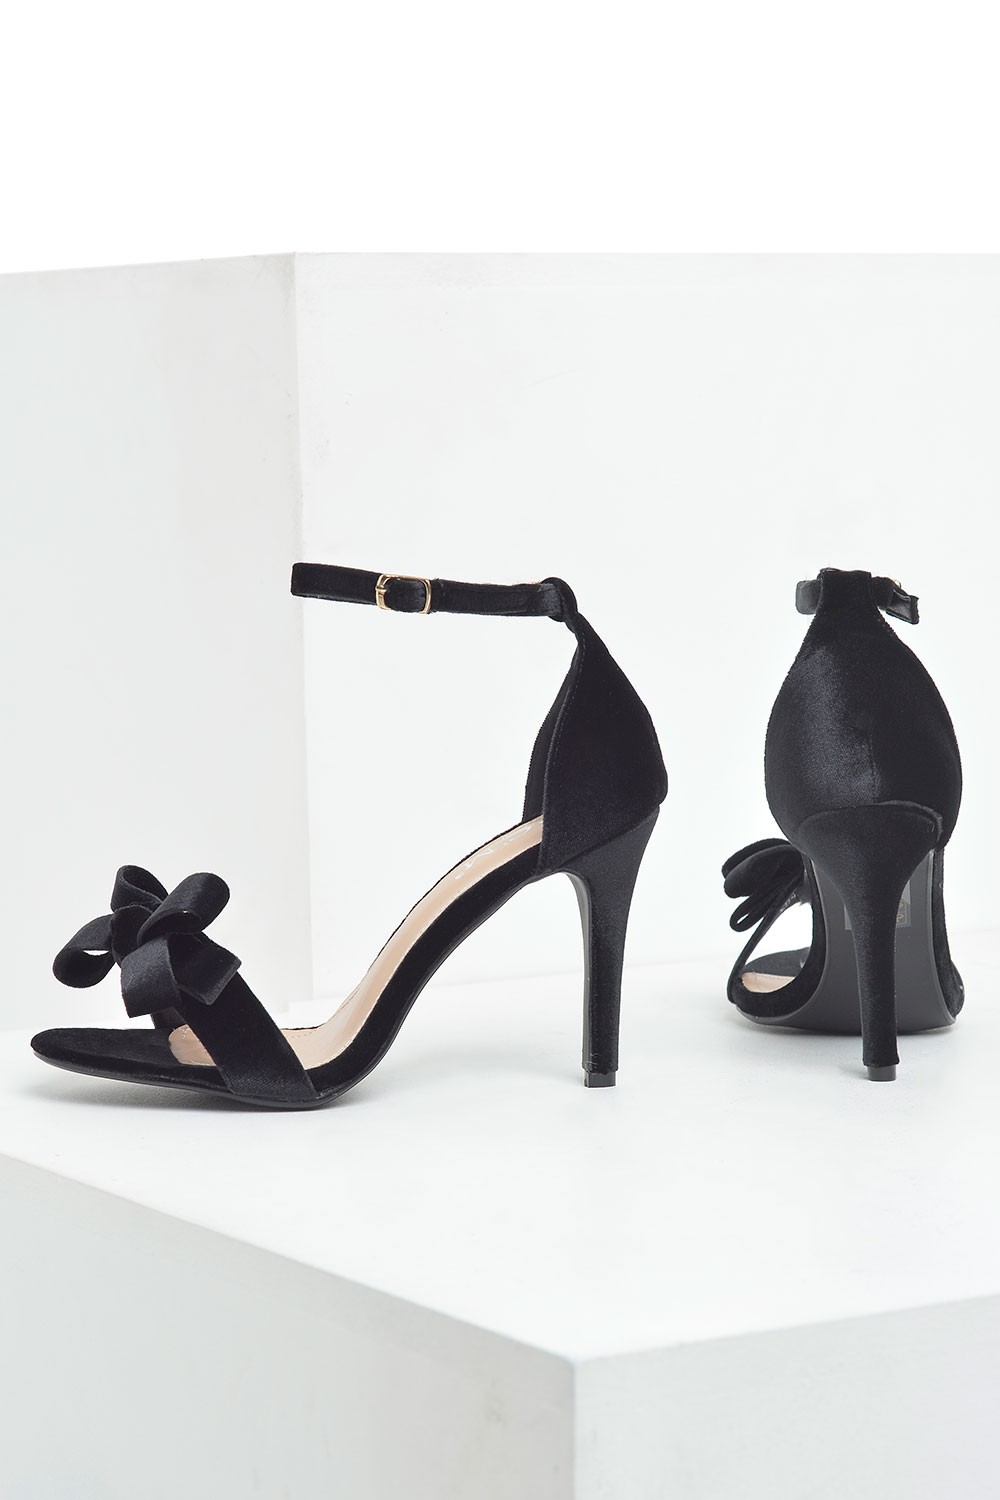 C'M Paris Nina Bow Velvet Sandals in Black | iCLOTHING